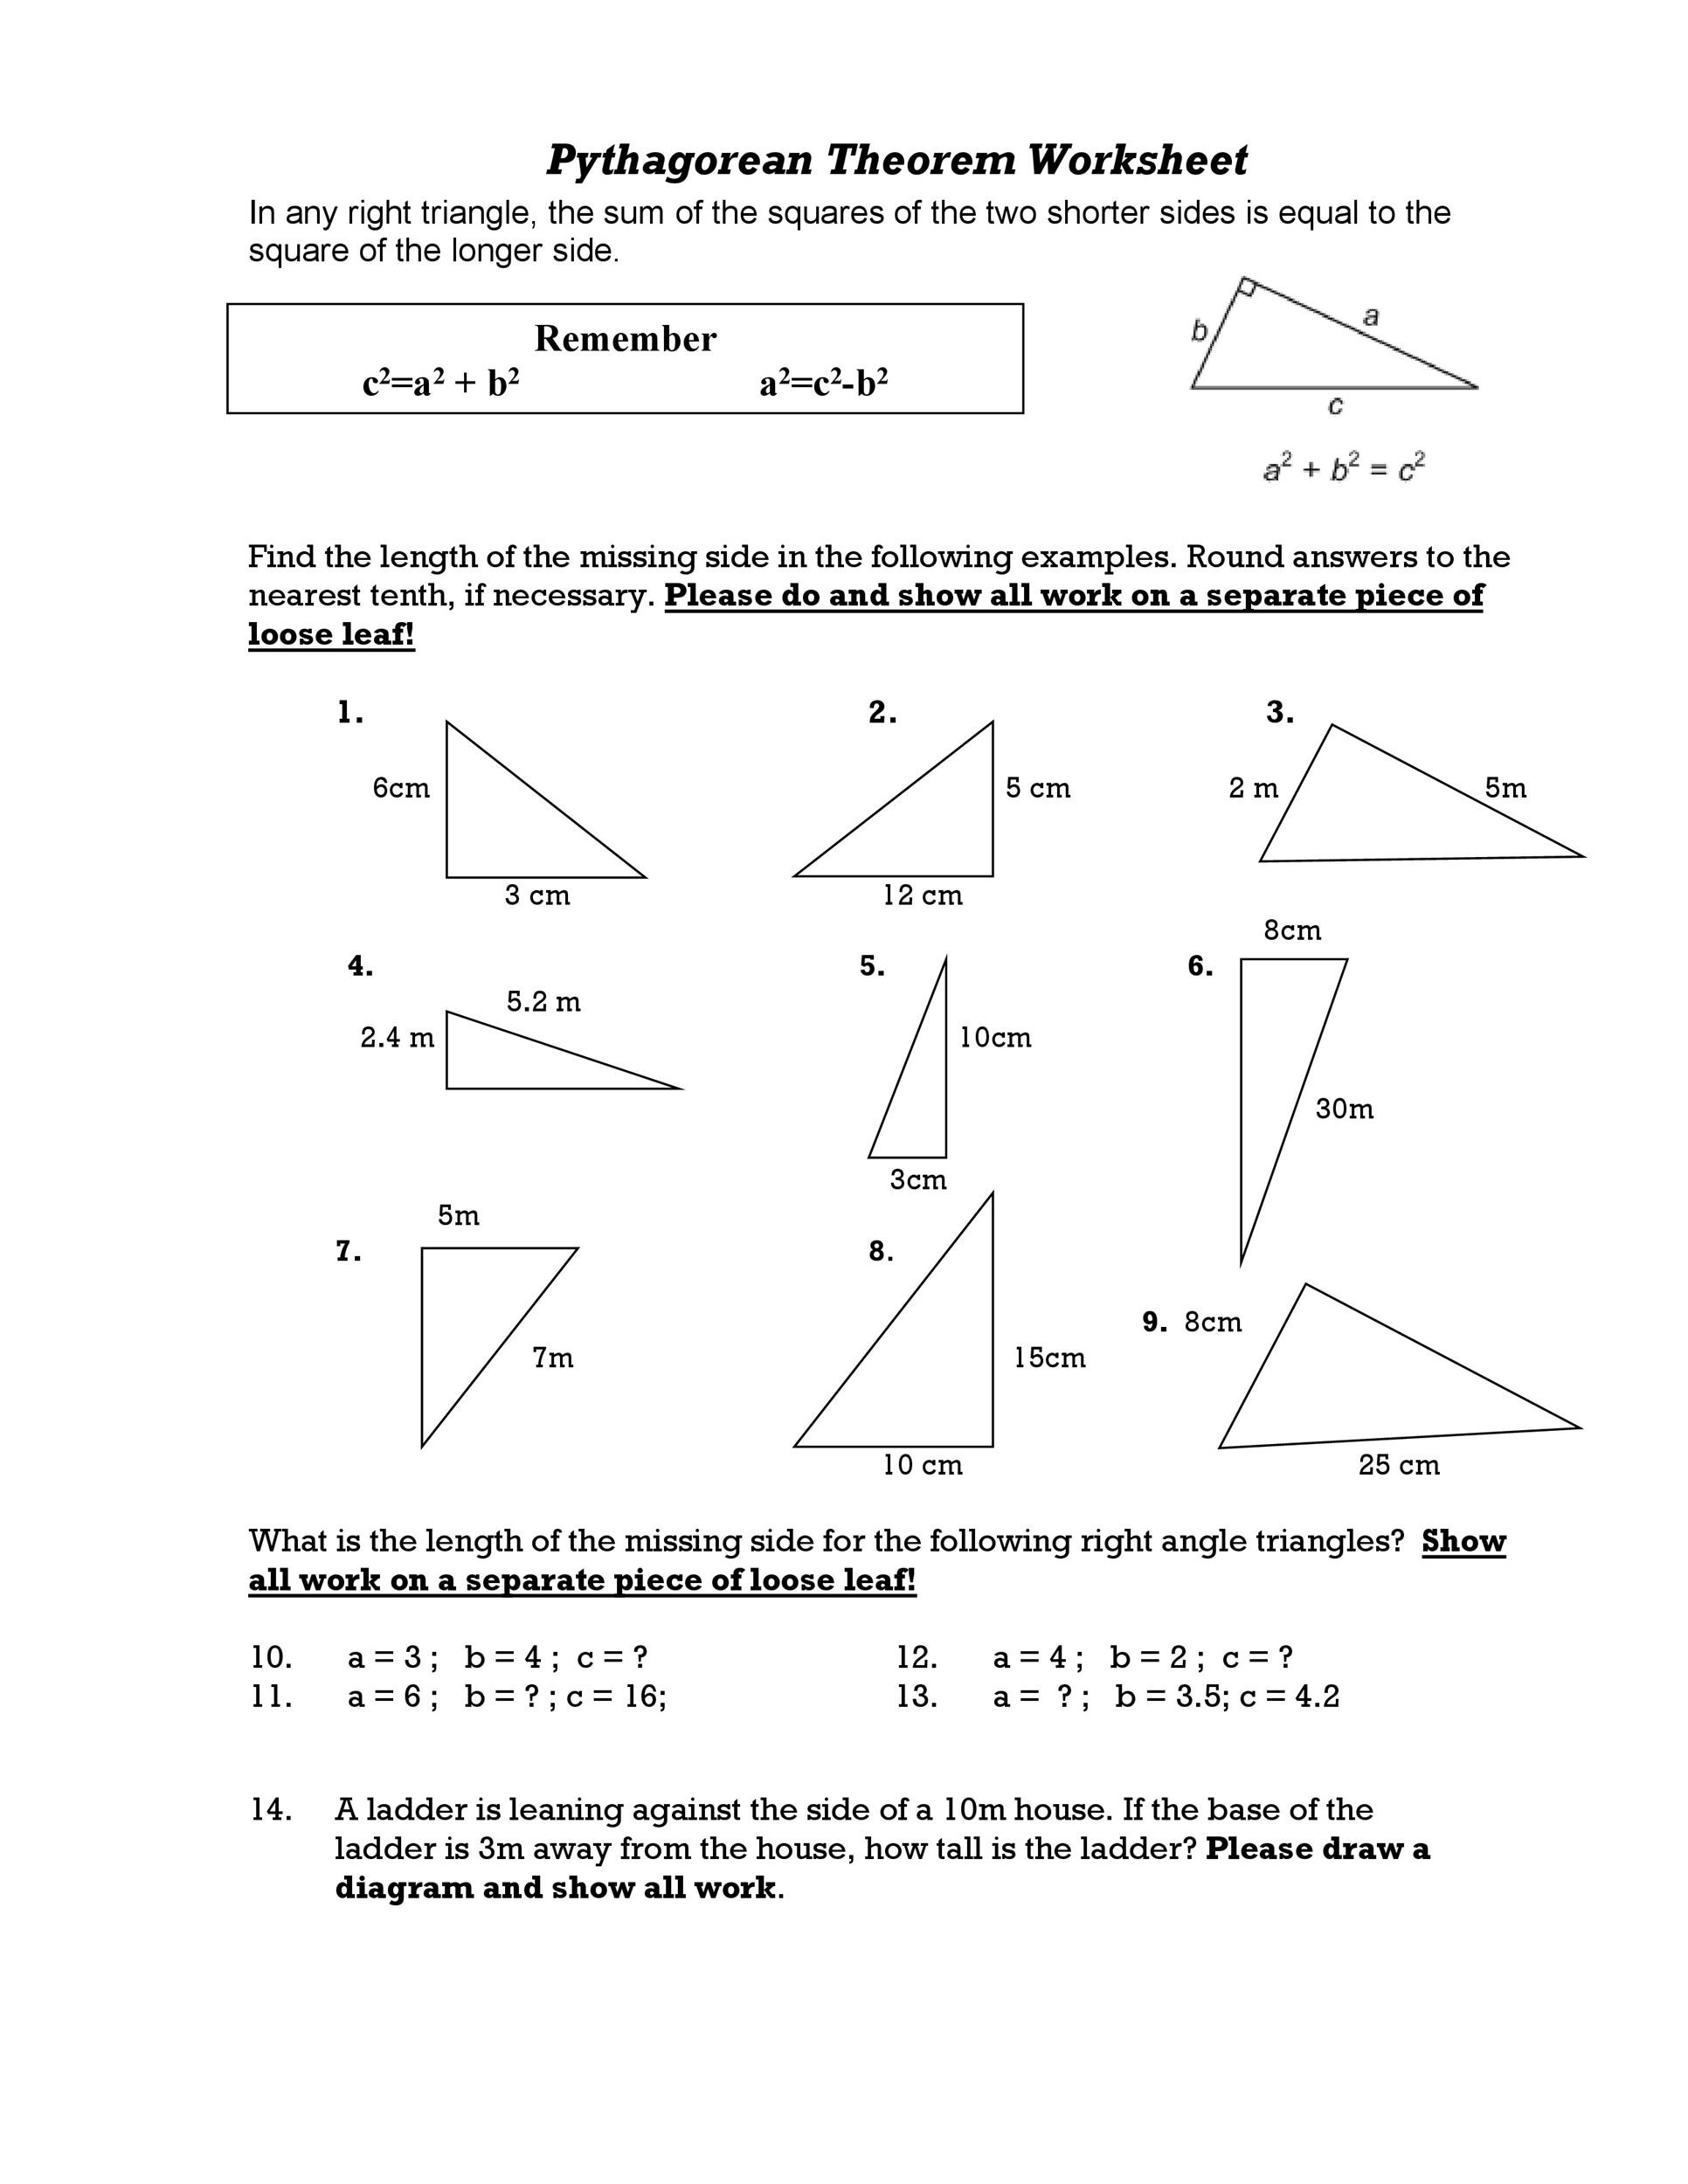 Pythagorean theorem Word Problems Worksheet 34 Pythagorean theorem Worksheet Answer Key Worksheet